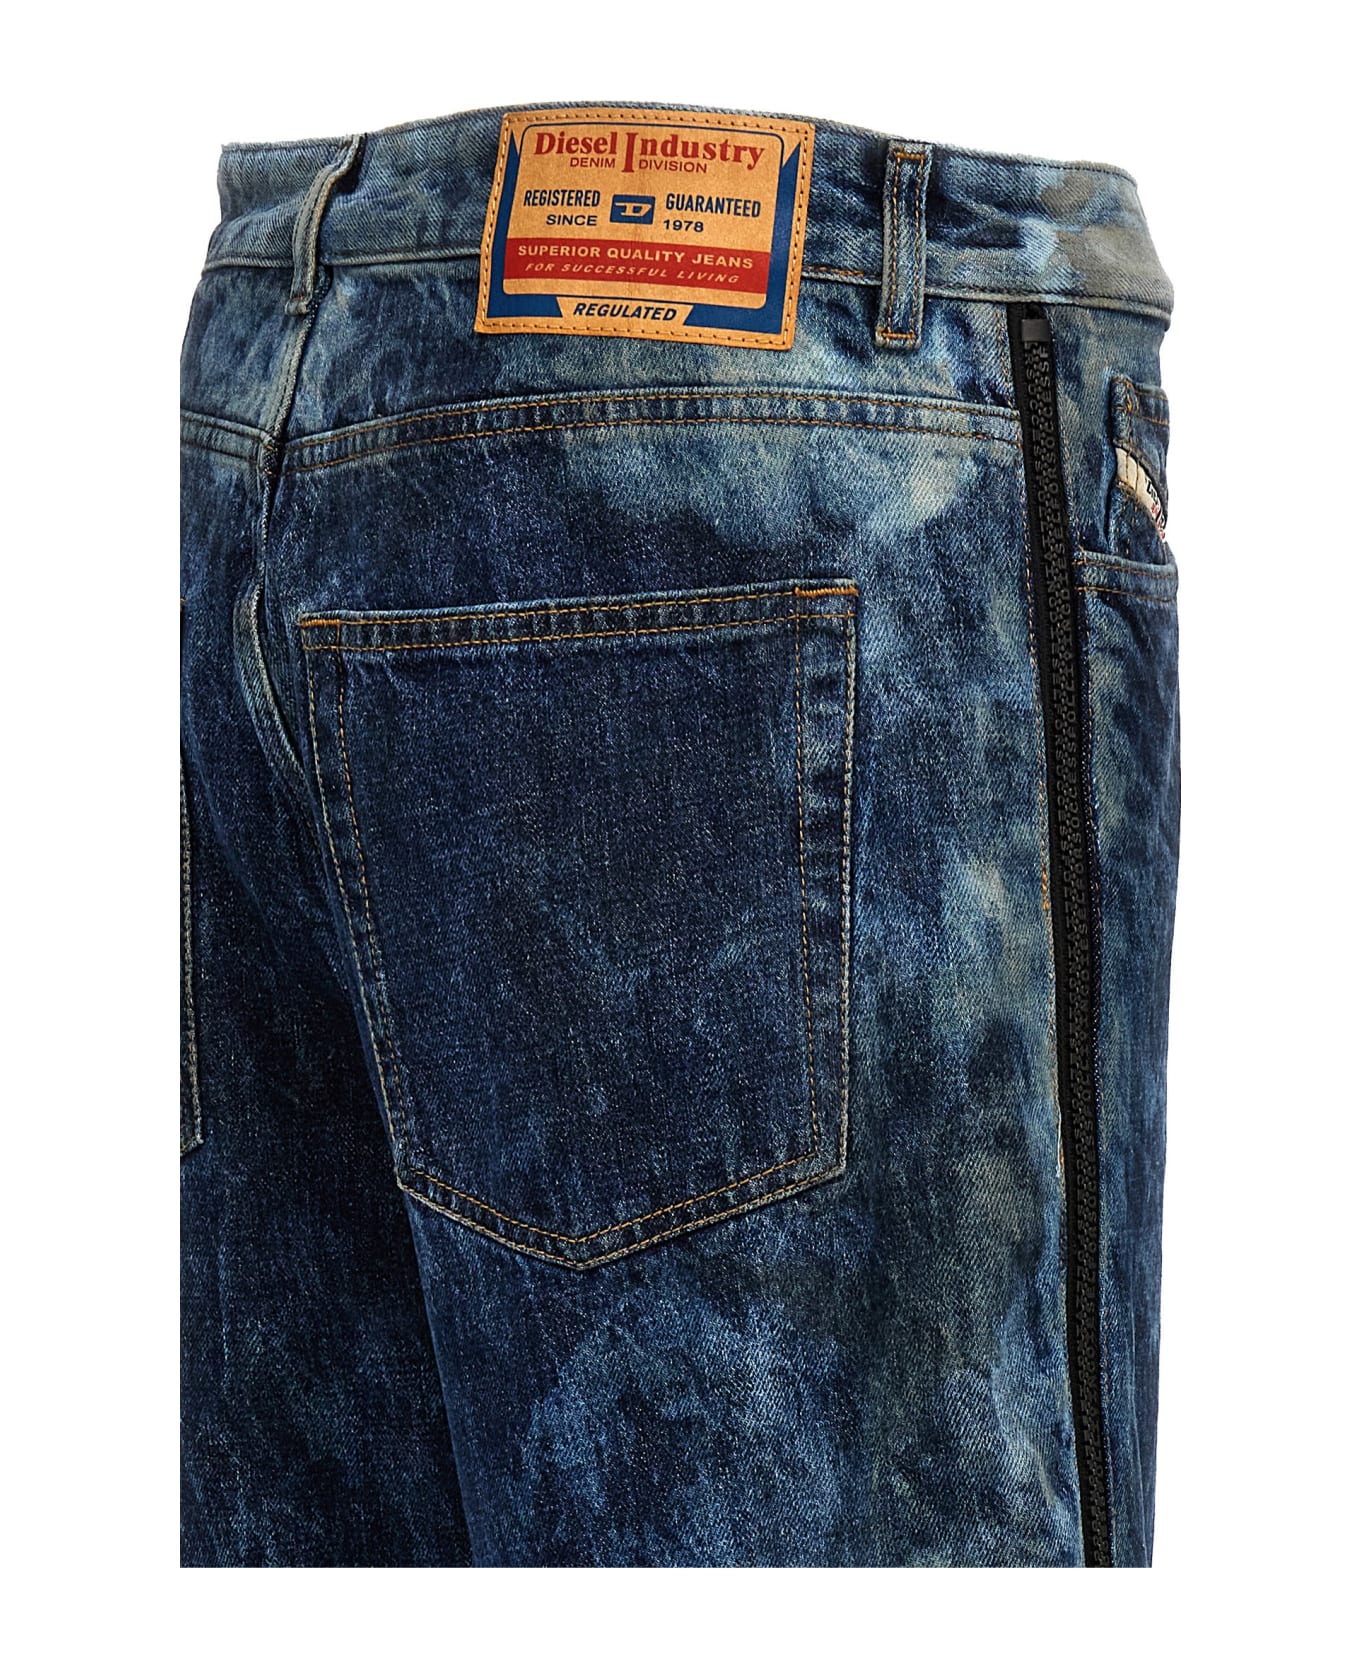 Diesel 'd-rise 0pgax' Jeans